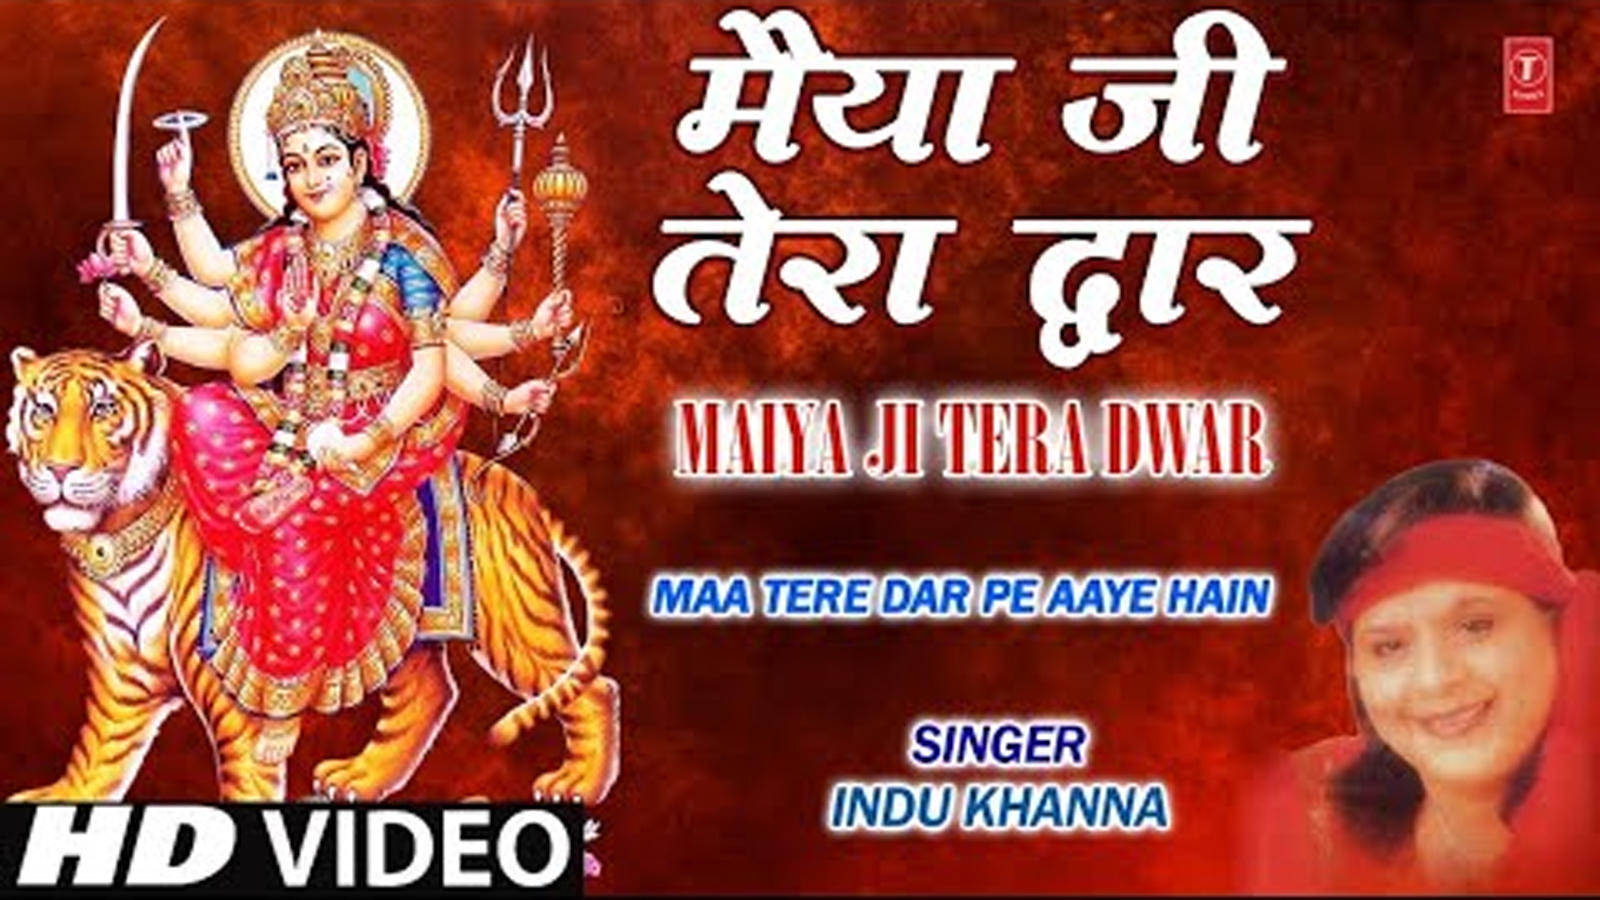 मैया जी तेरा द्वार | Watch Popular Hindi Devotional Video Song 'Maiya Ji  Tera Dwar' Sung By 'Indu Khanna'. Popular Hindi Devotional Songs of 2020 |  Hindi Bhakti Songs, Devotional Songs, Bhajans